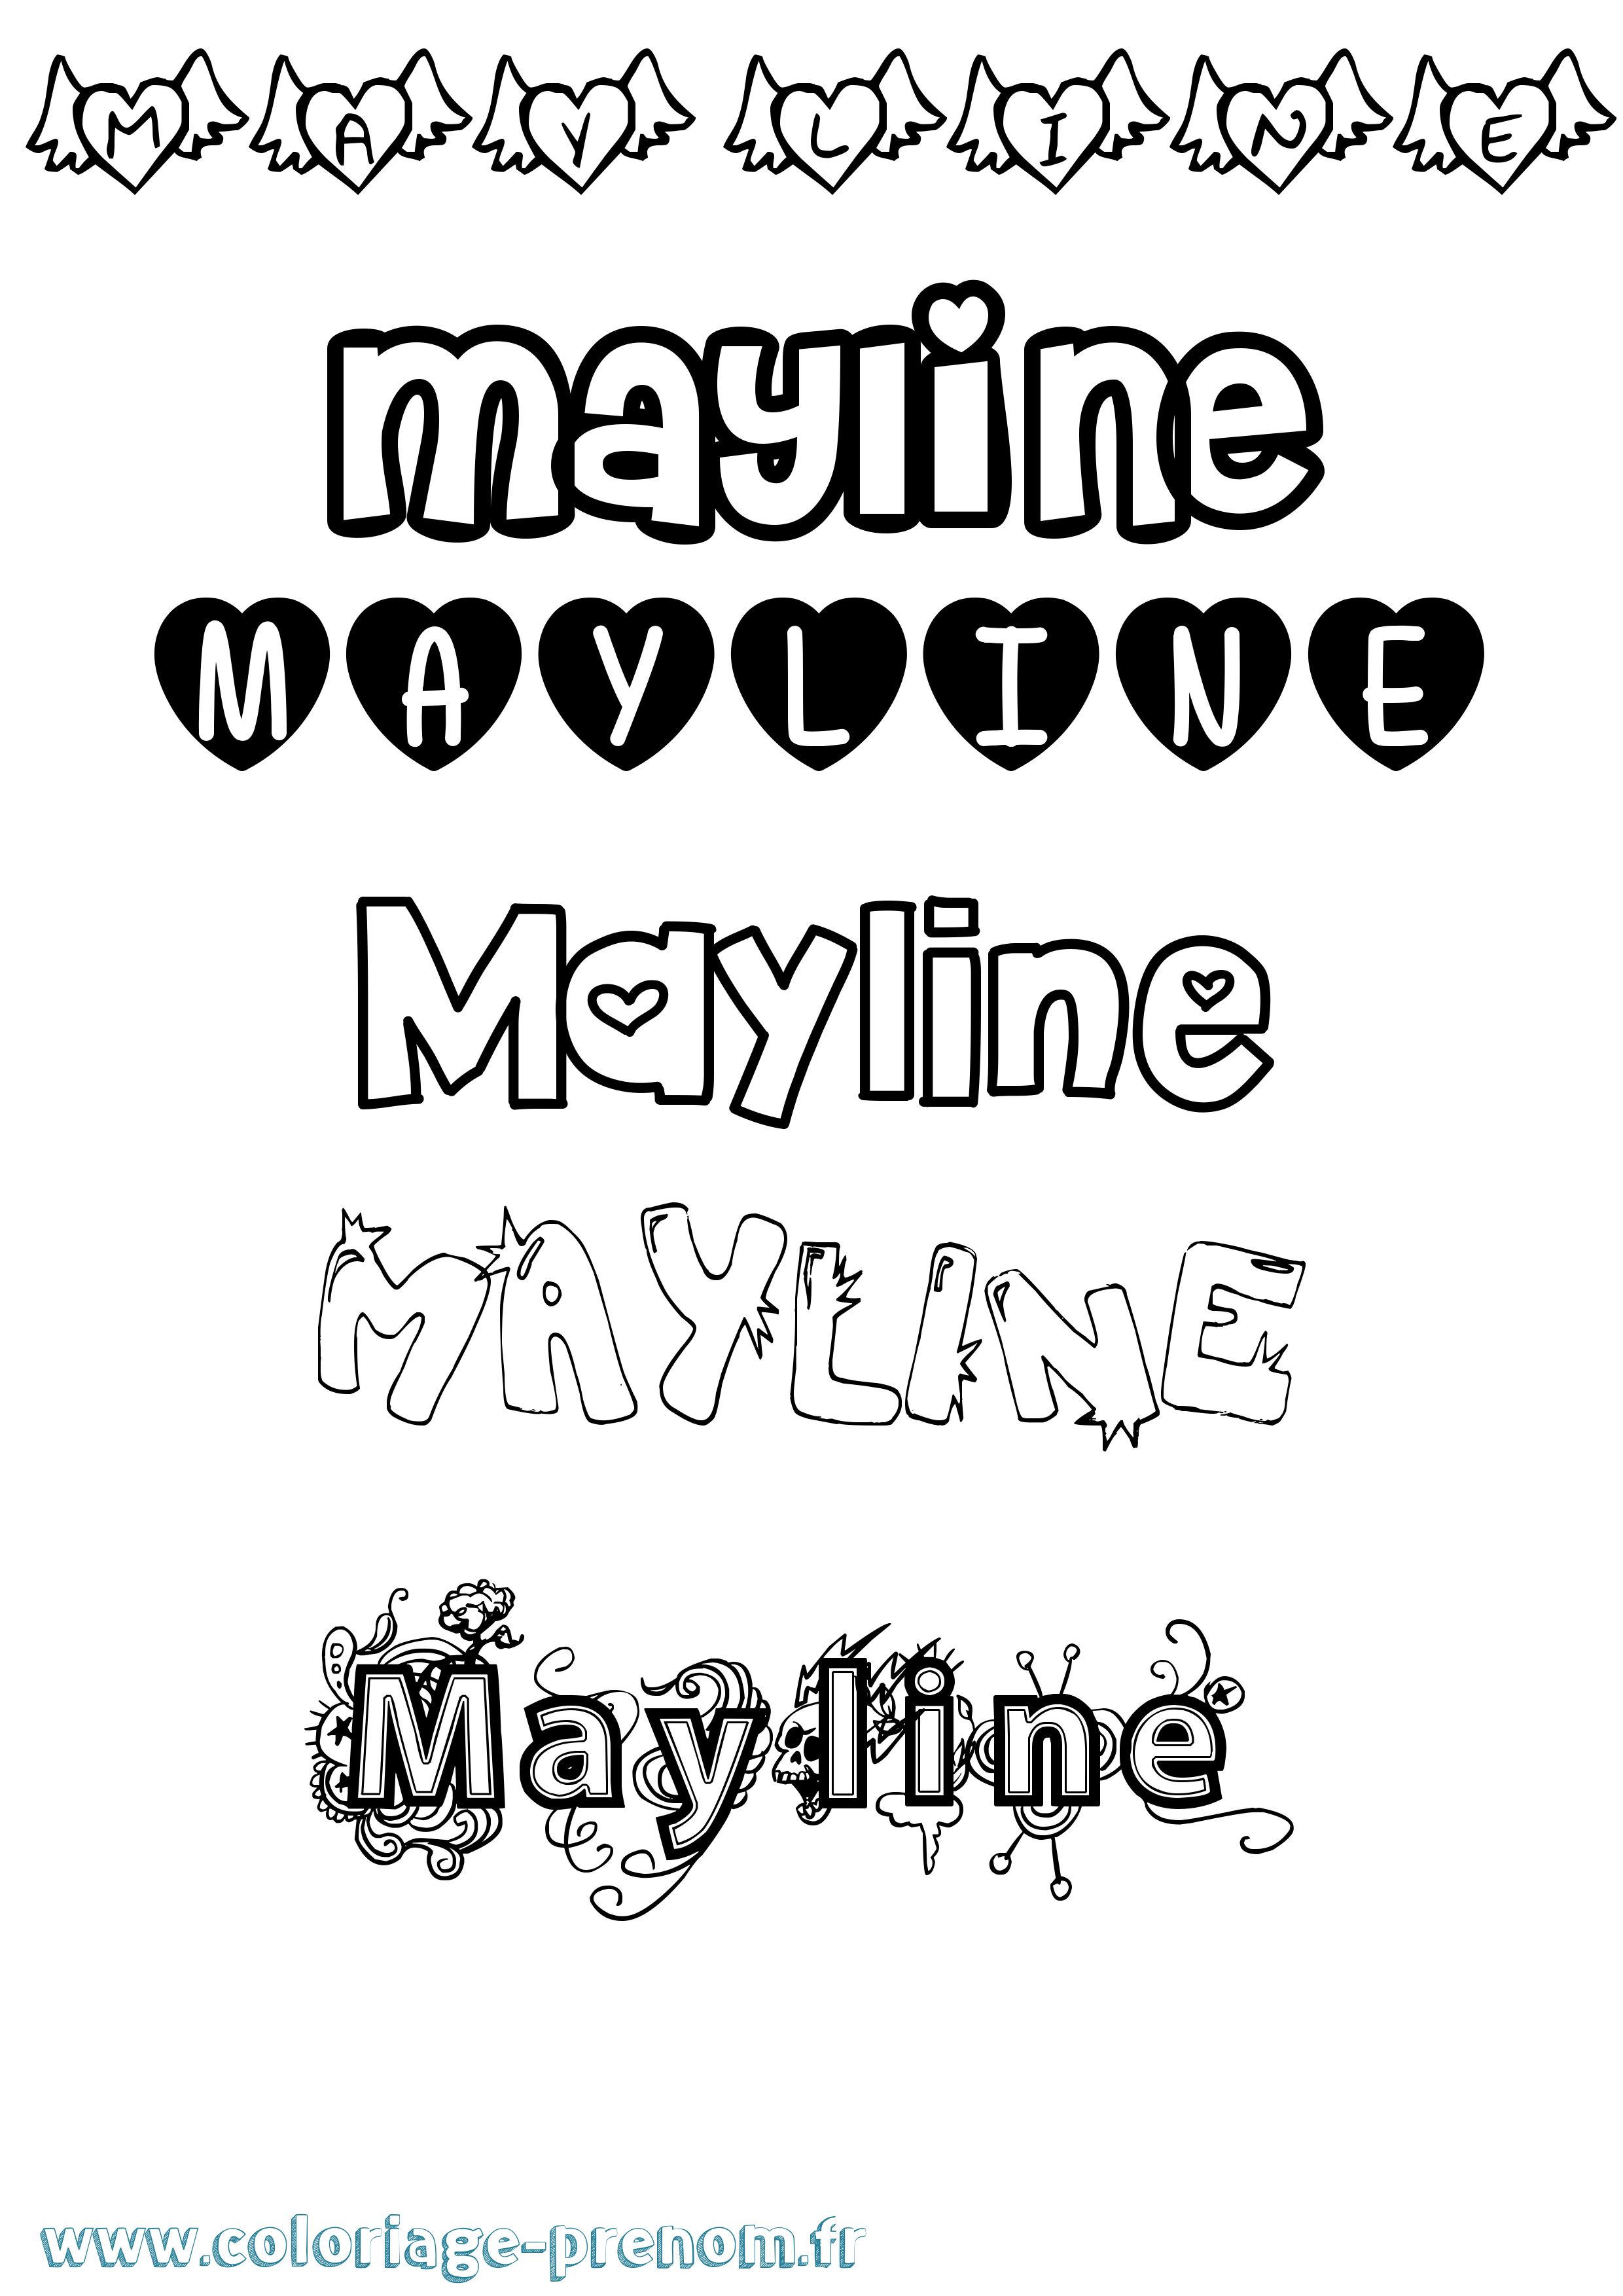 Coloriage prénom Mayline